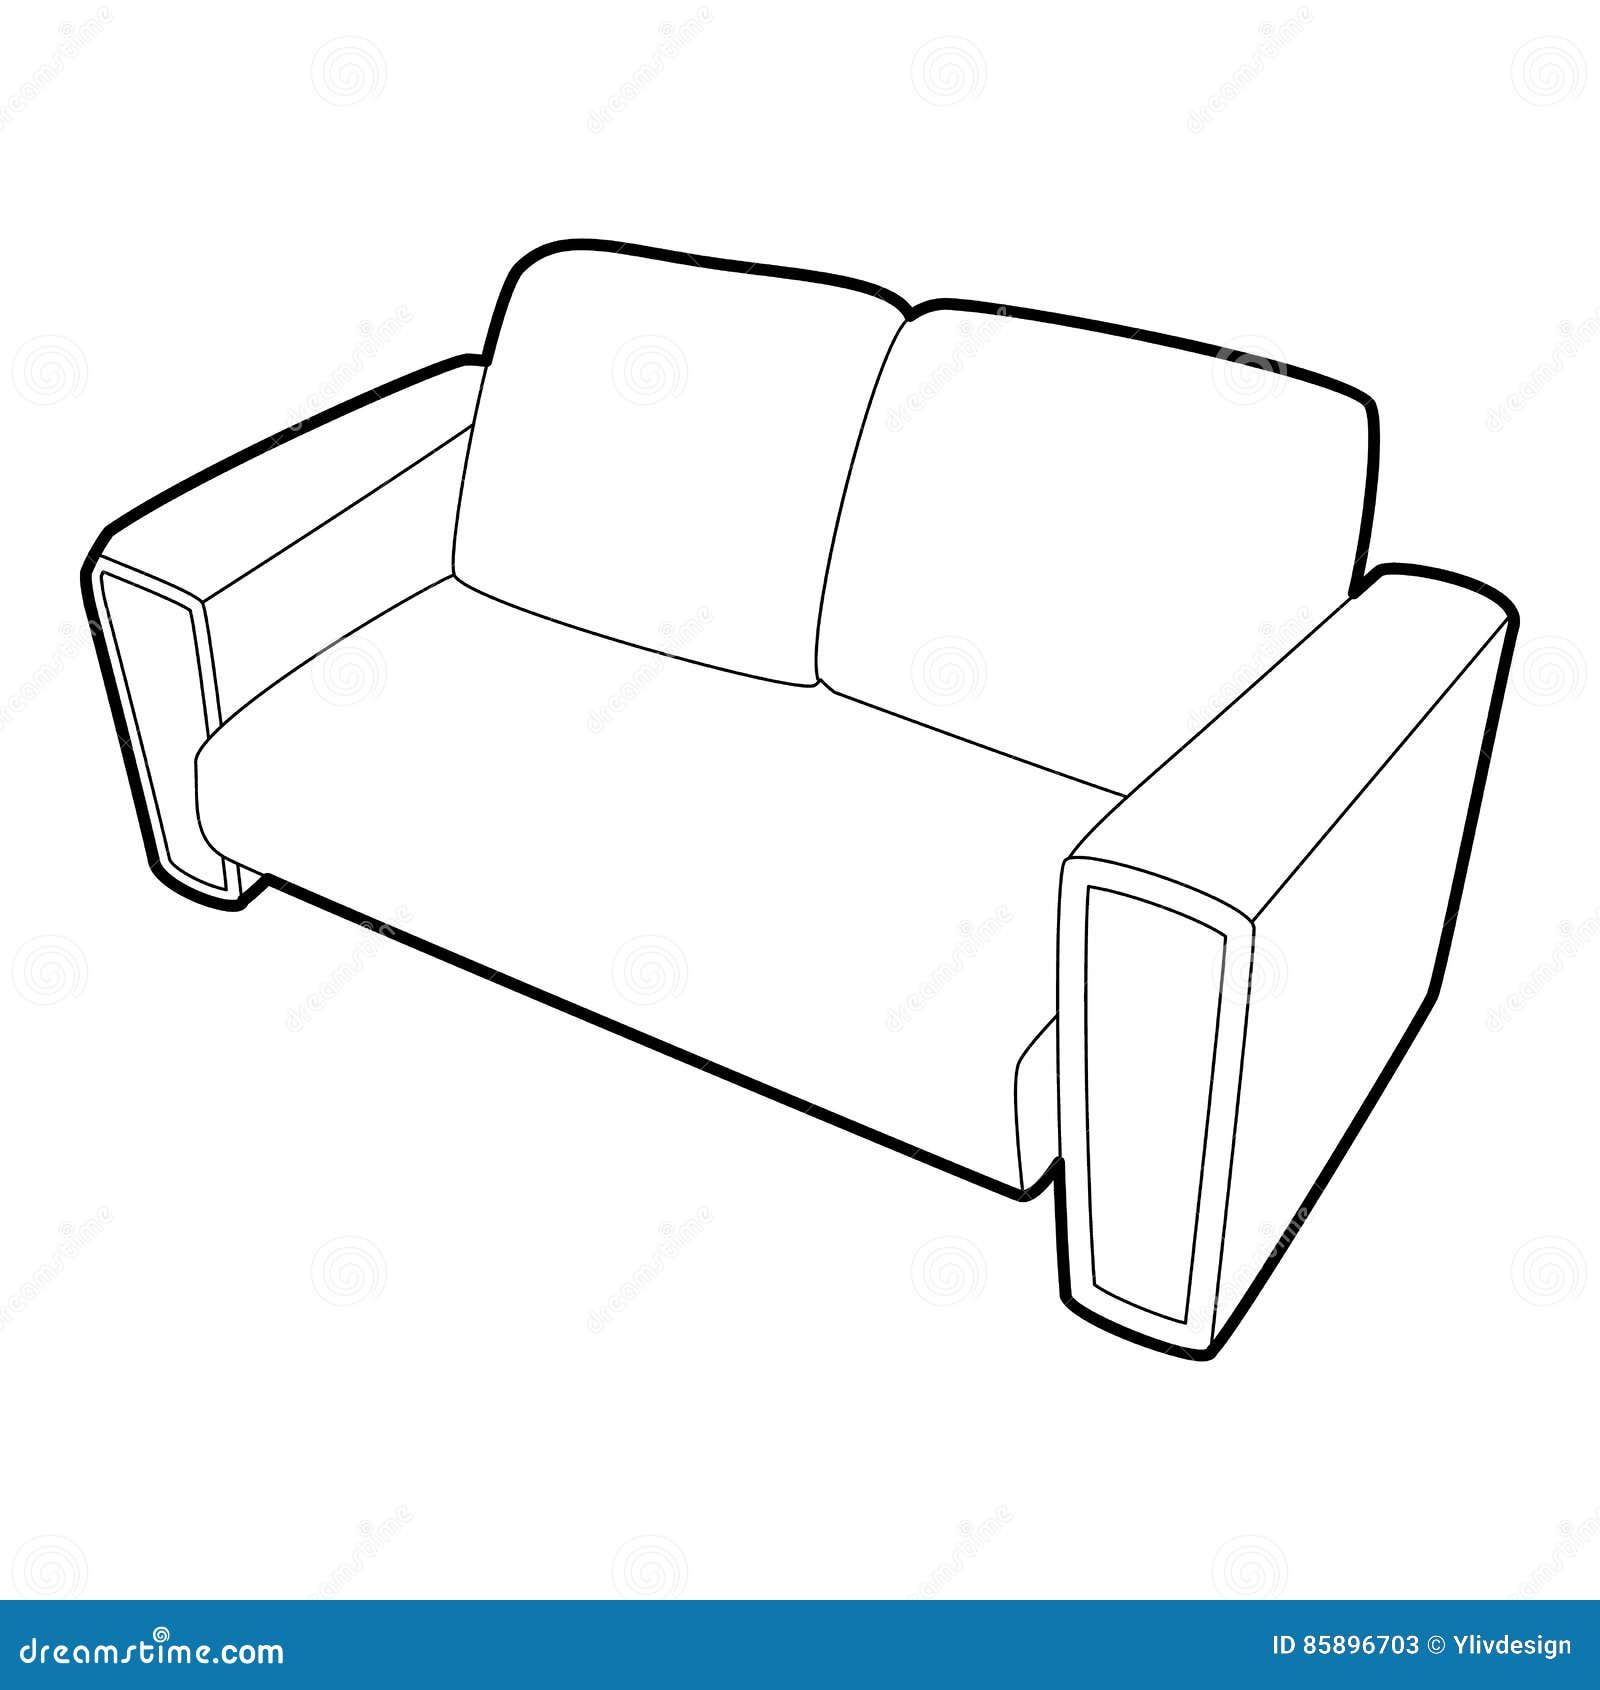 Контур дивана и кресла, значок